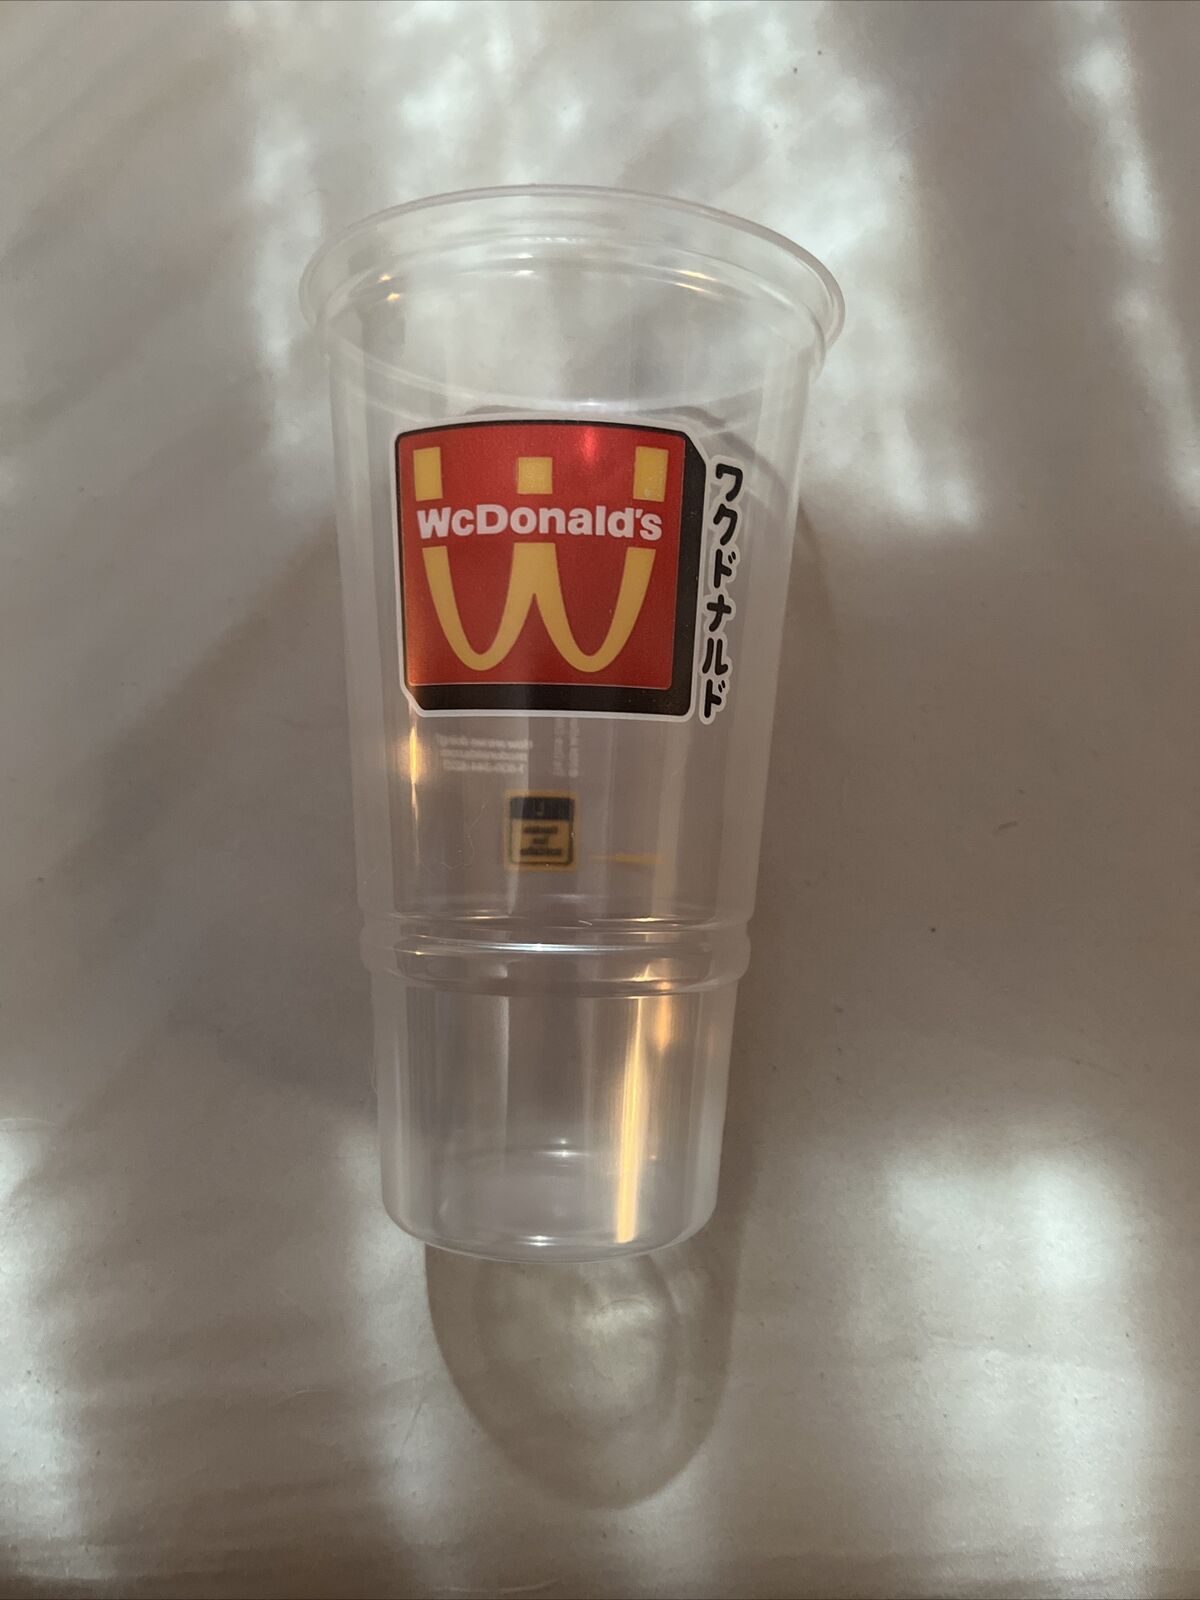 McDonald’s WcDonalds Large Soda Cup - UNUSED